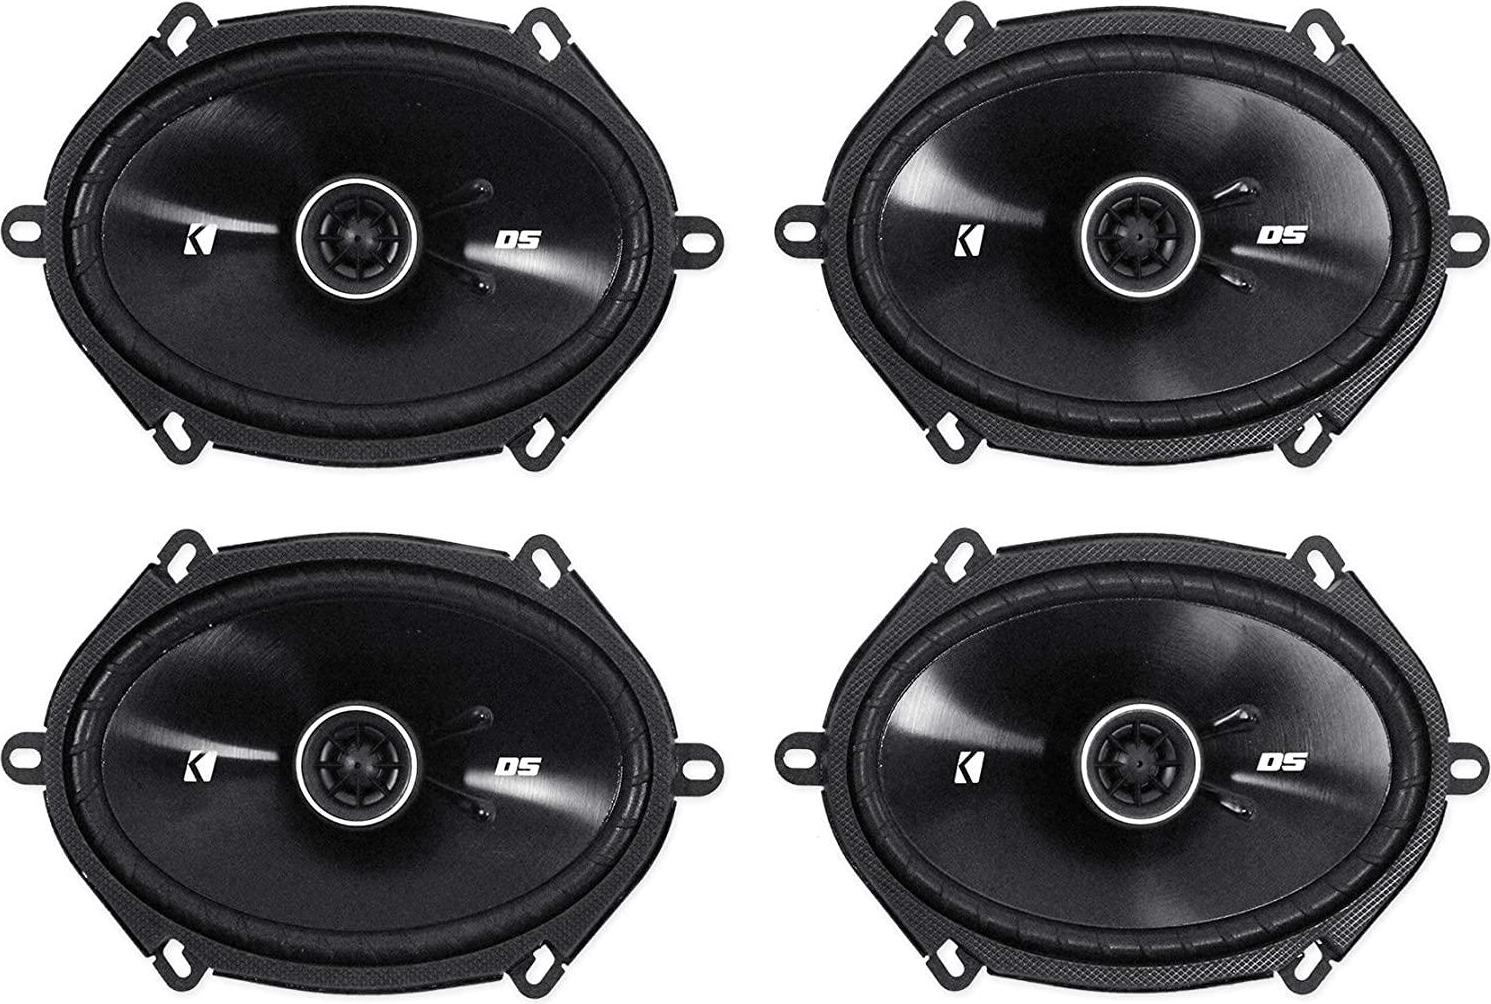 Kicker, Kicker 43DSC6804 DS 6x8 400 Watt 2-Way 4-Ohm Car Audio Thin Profile Coaxial Speakers with Dome Tweeters, Foam Surrounds and Polypropylene Cone, 2 Pairs